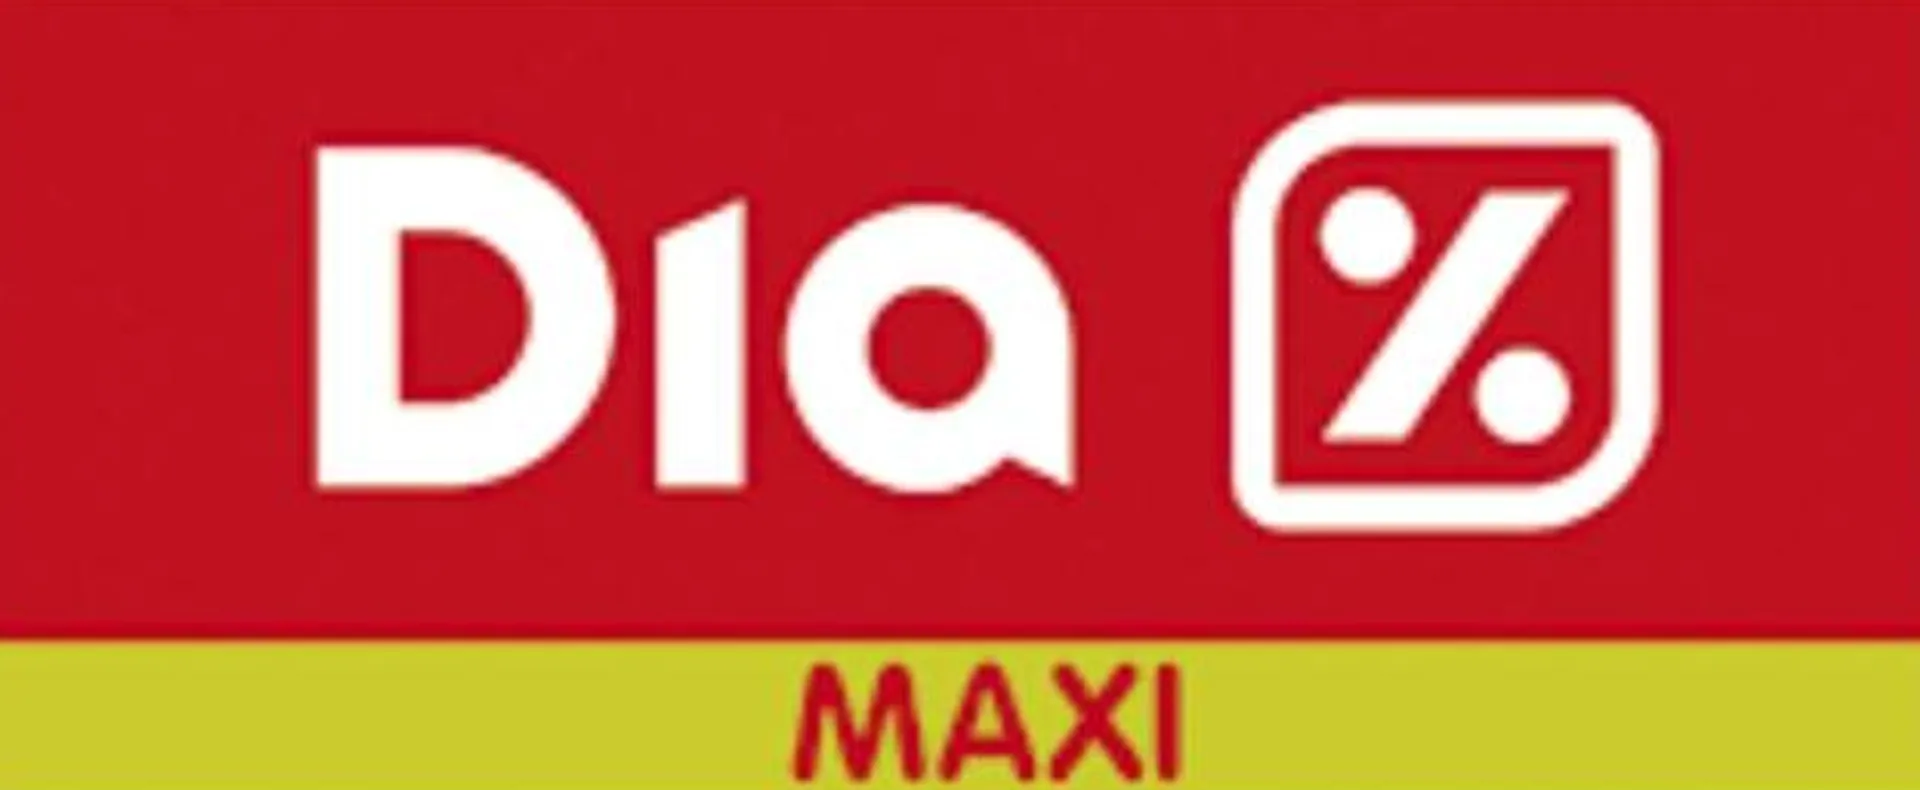 MAXI DIA logo de catálogo